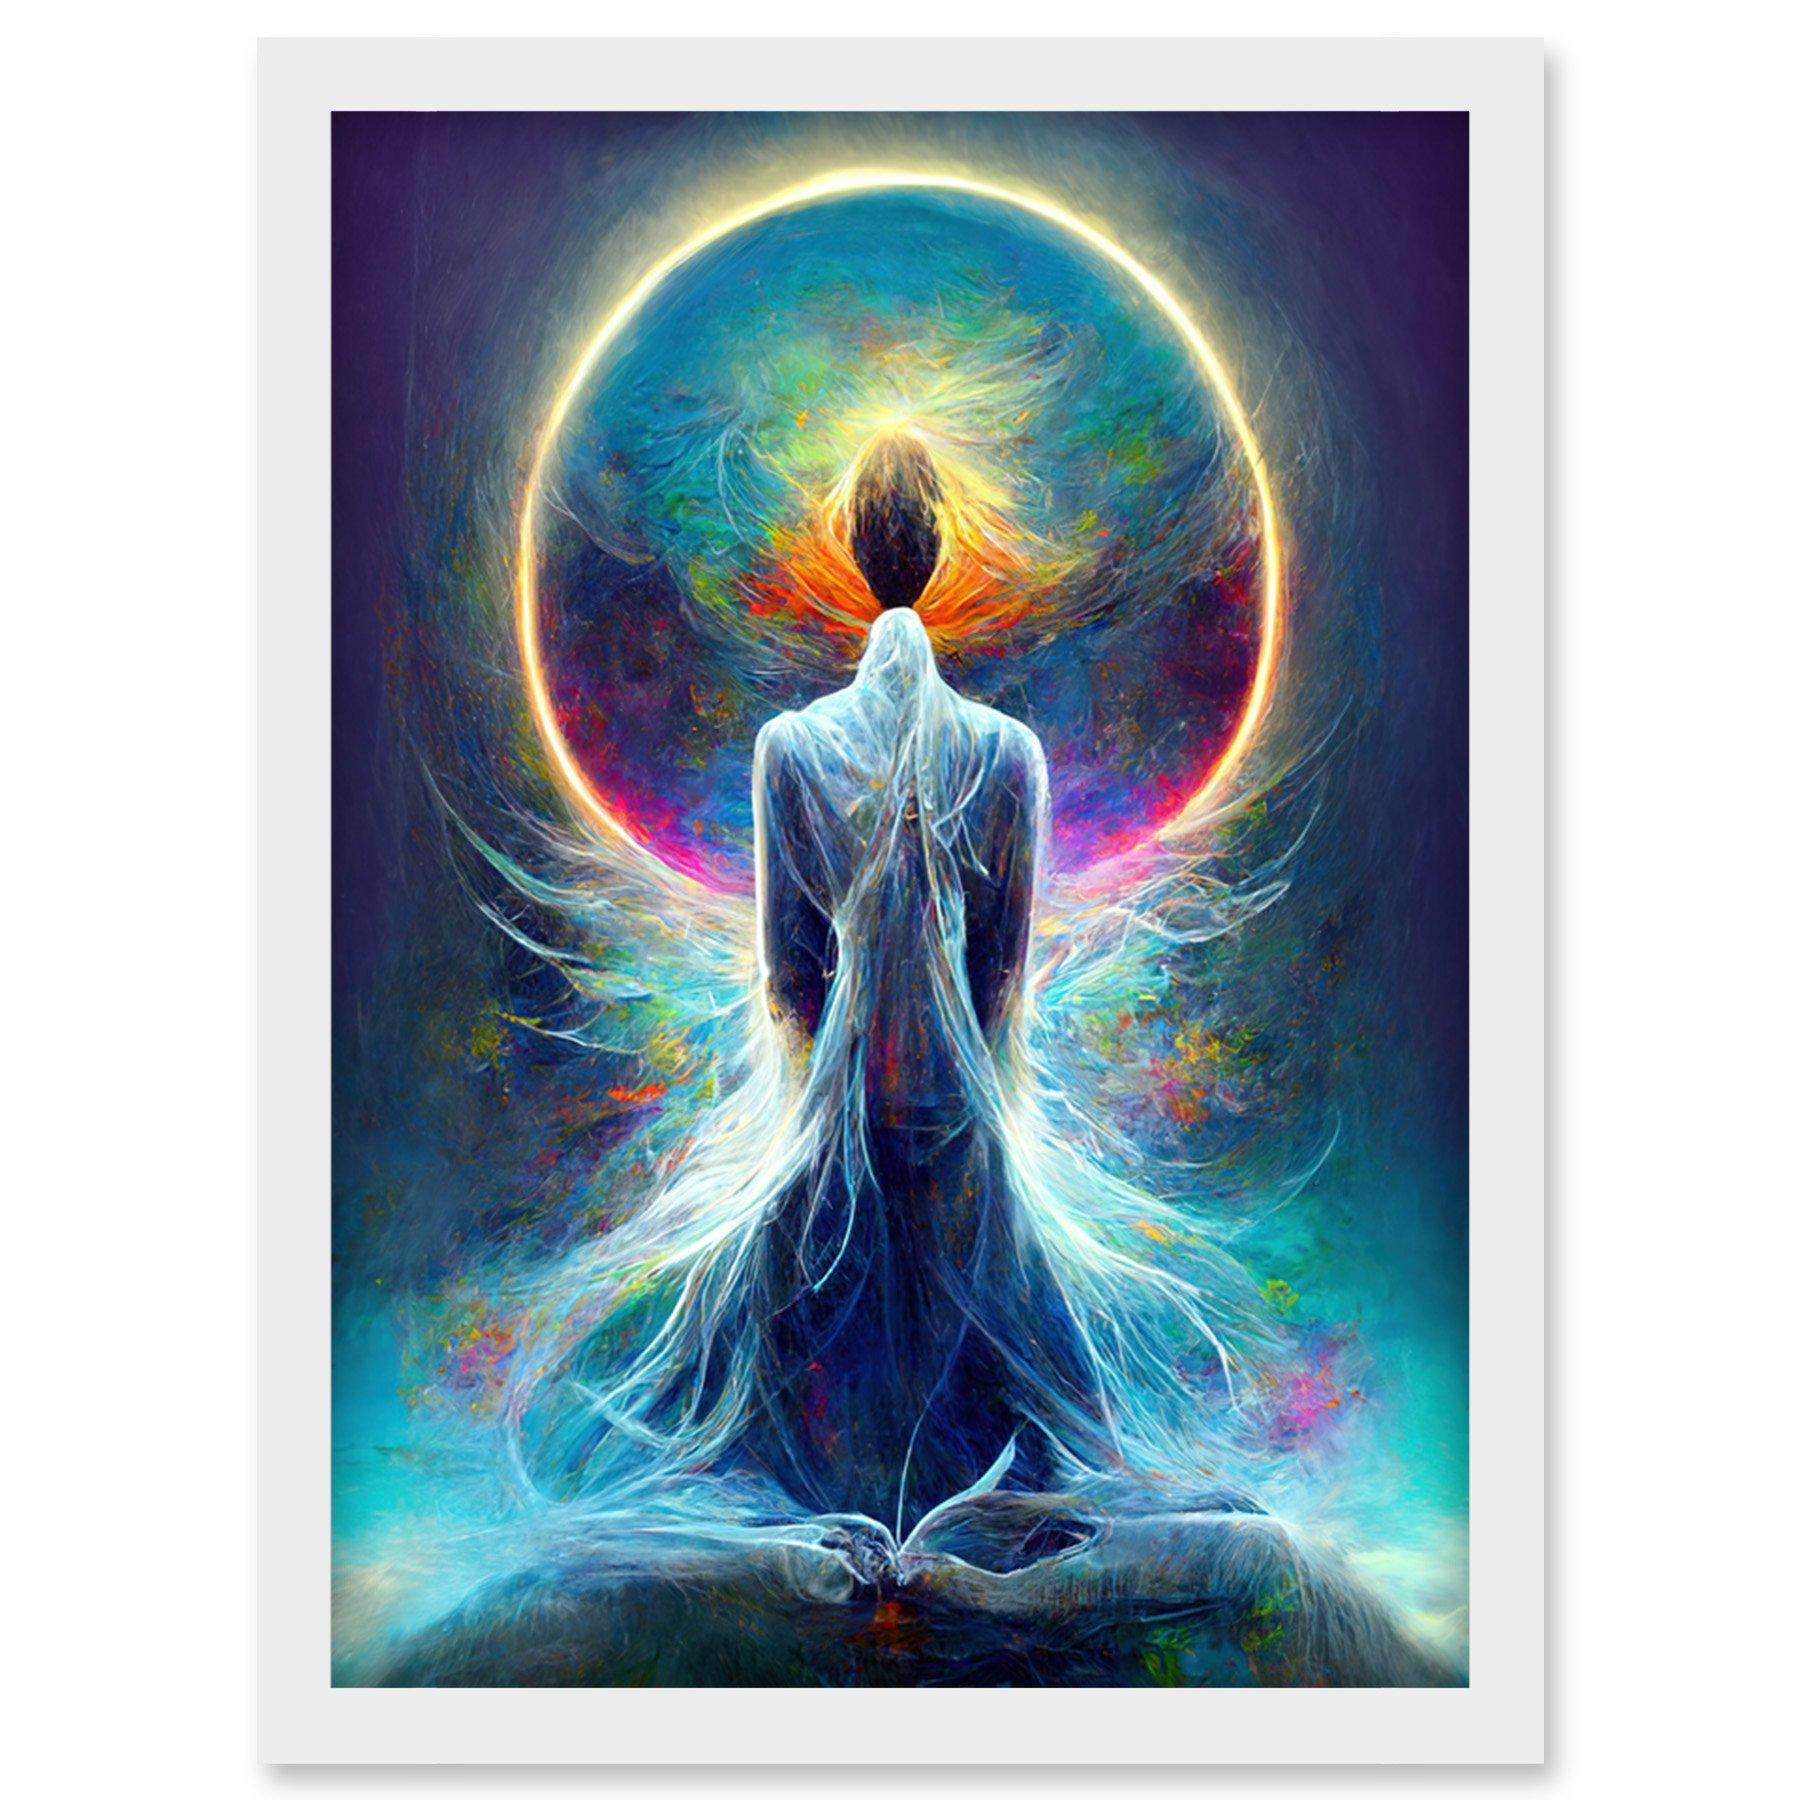 Mystical Psychic Spiritual Dream Artwork Framed Wall Art Print A4 - image 1